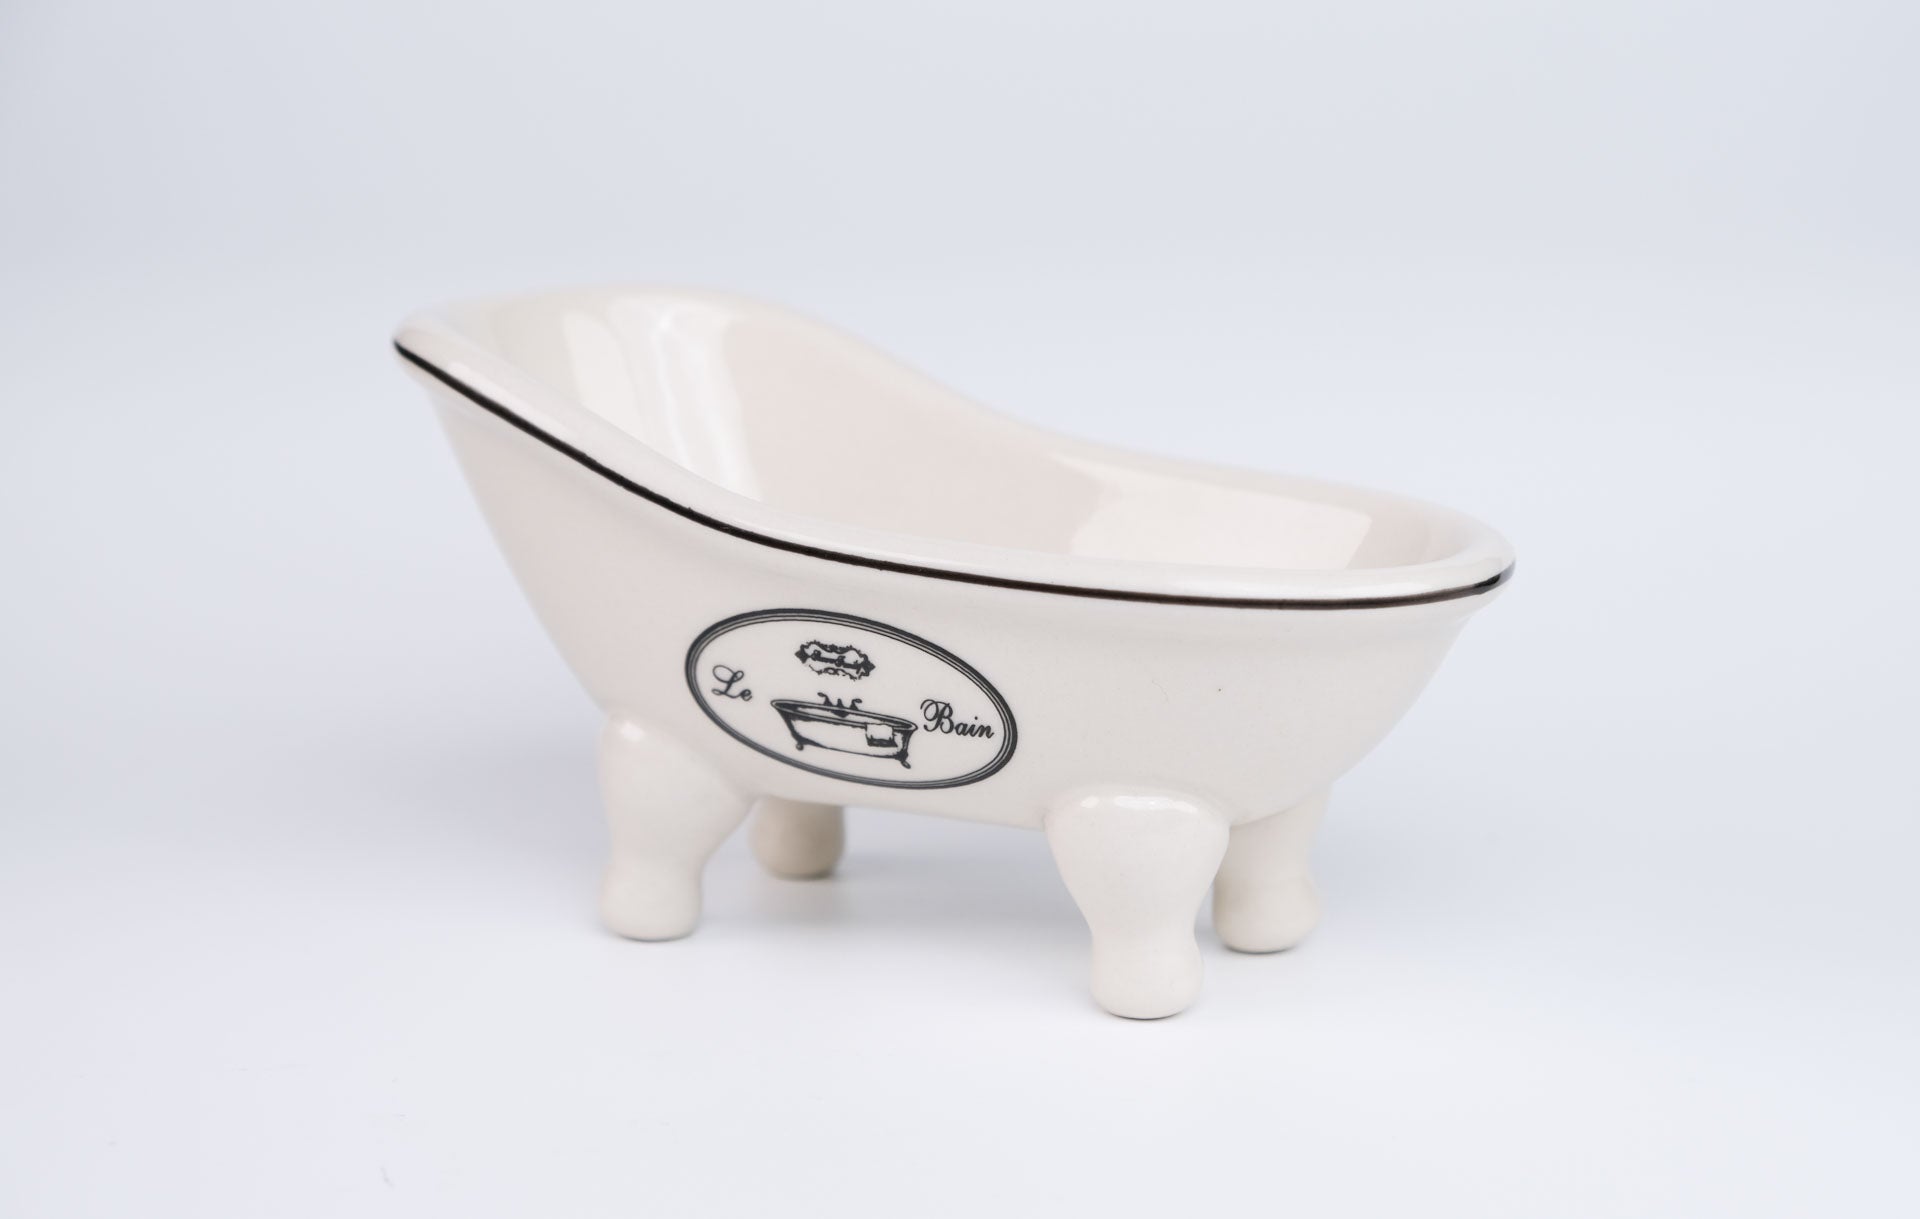 White Porcelain, "Le Bain" Bathtub Soap Dish